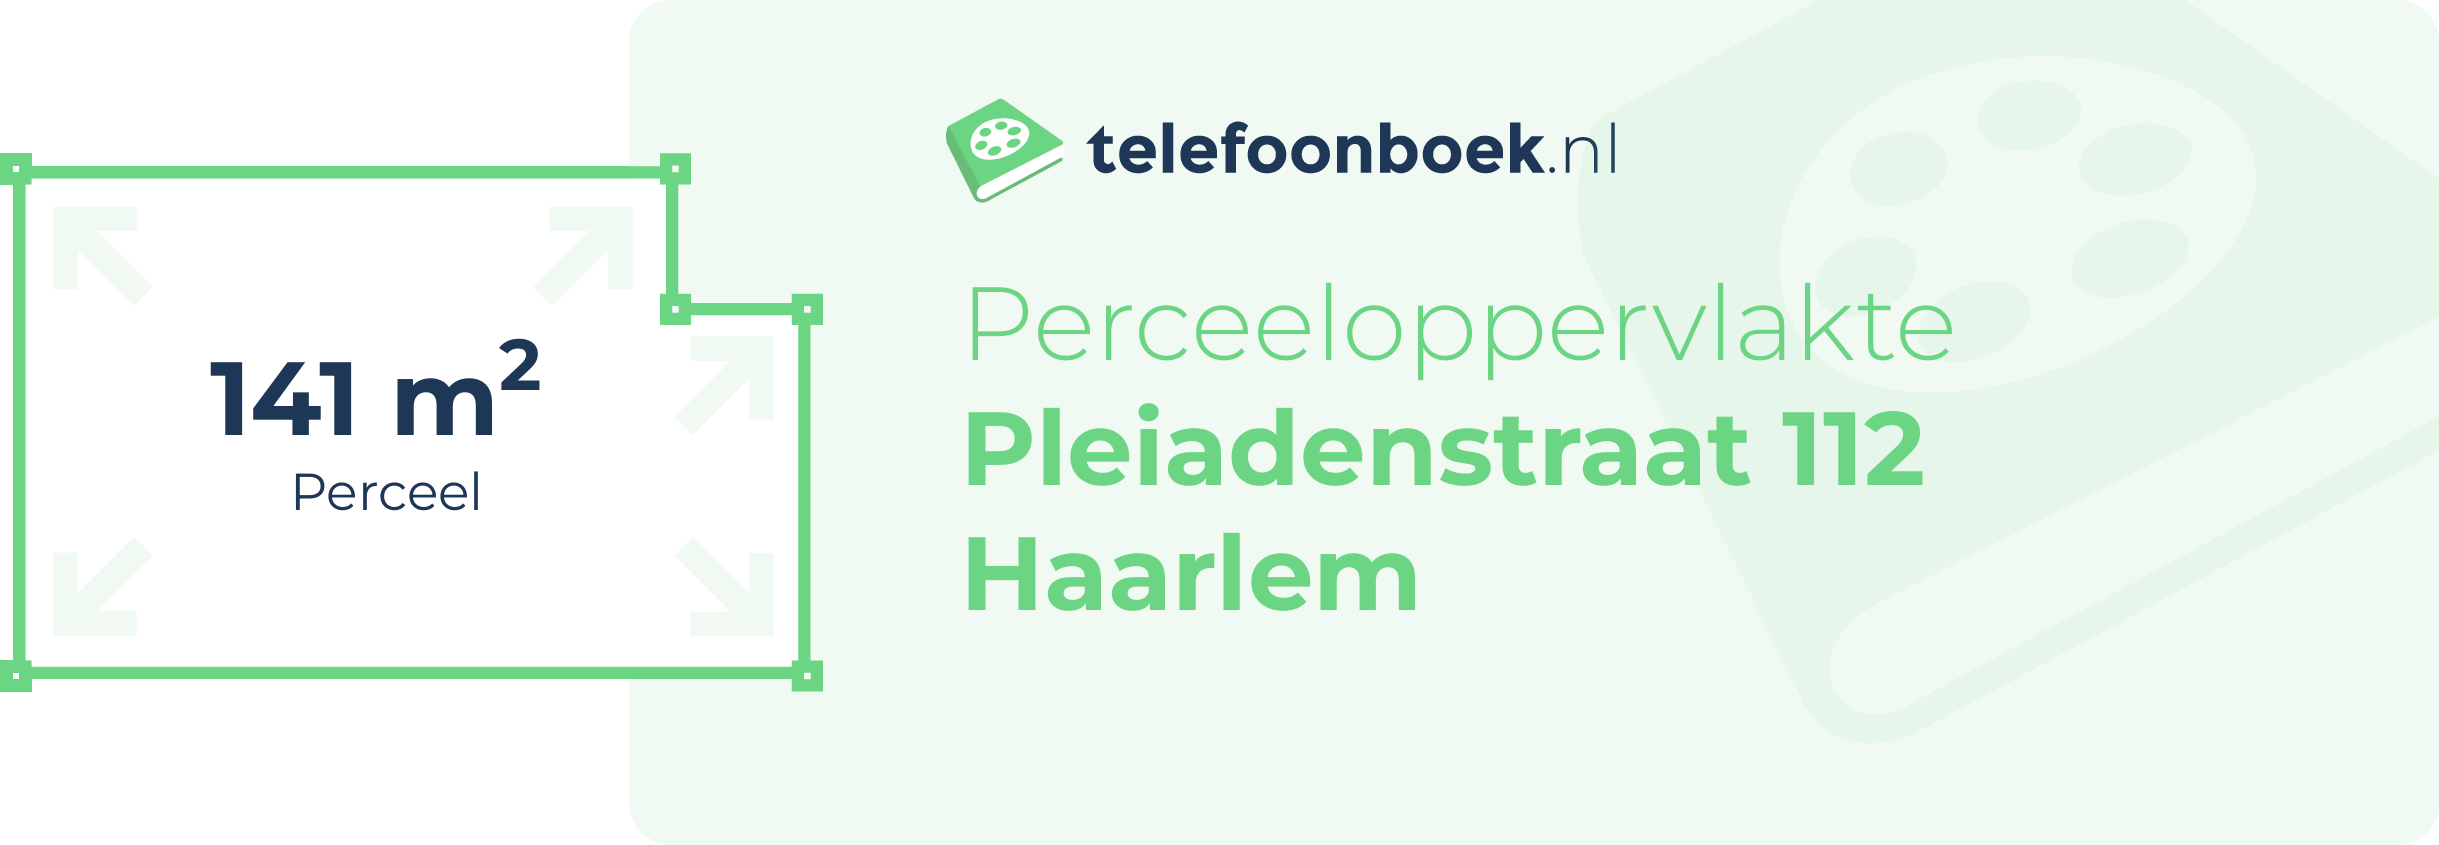 Perceeloppervlakte Pleiadenstraat 112 Haarlem